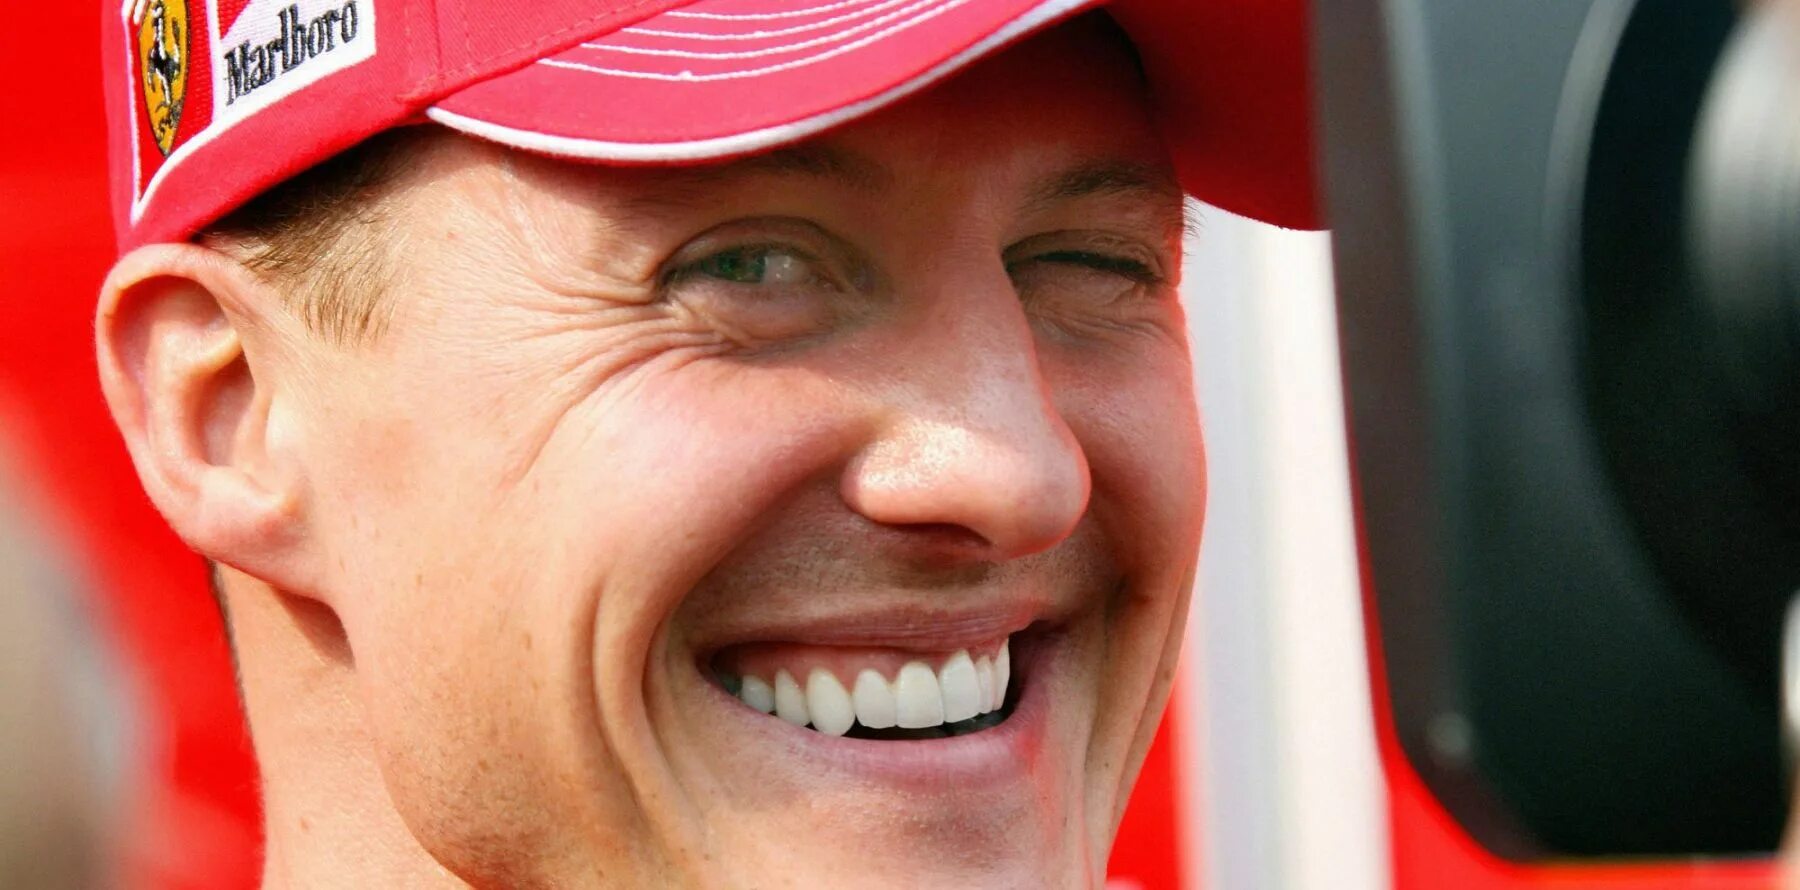 Михаэль Шумахер. Михаэль Шумахер улыбается. Михаэль Шумахер фото.